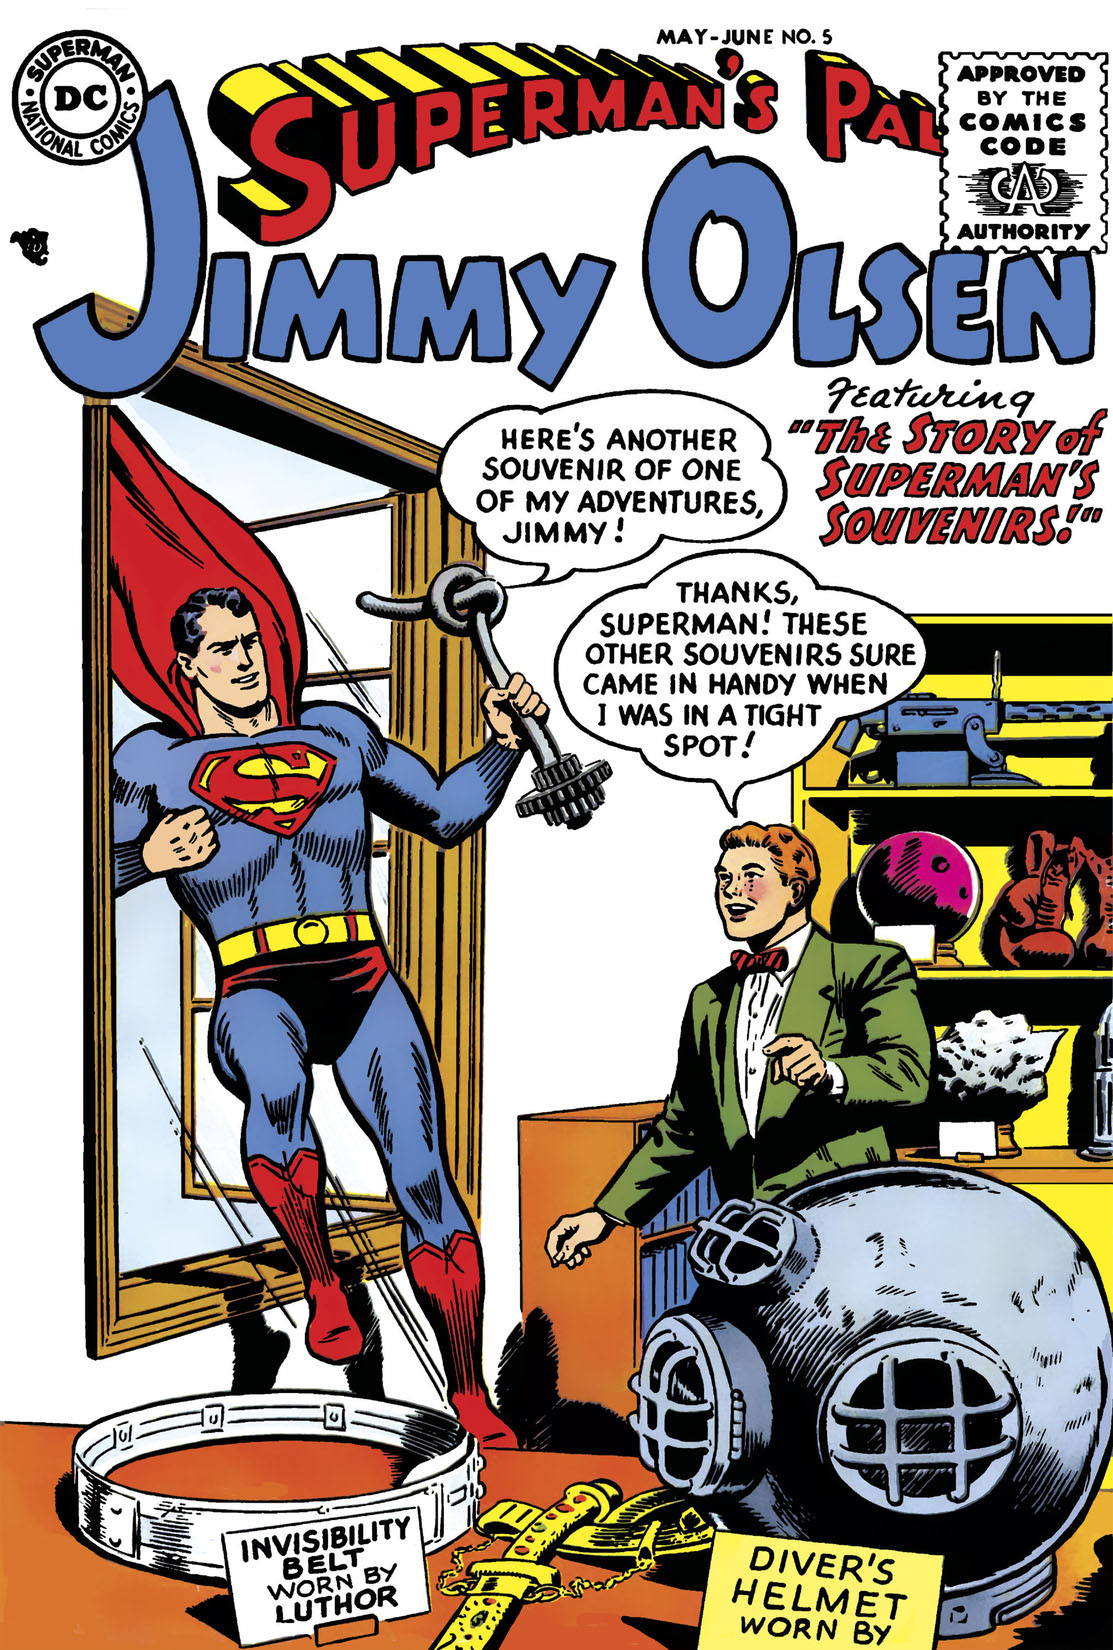 Superman's Pal, Jimmy Olsen #5 preview images